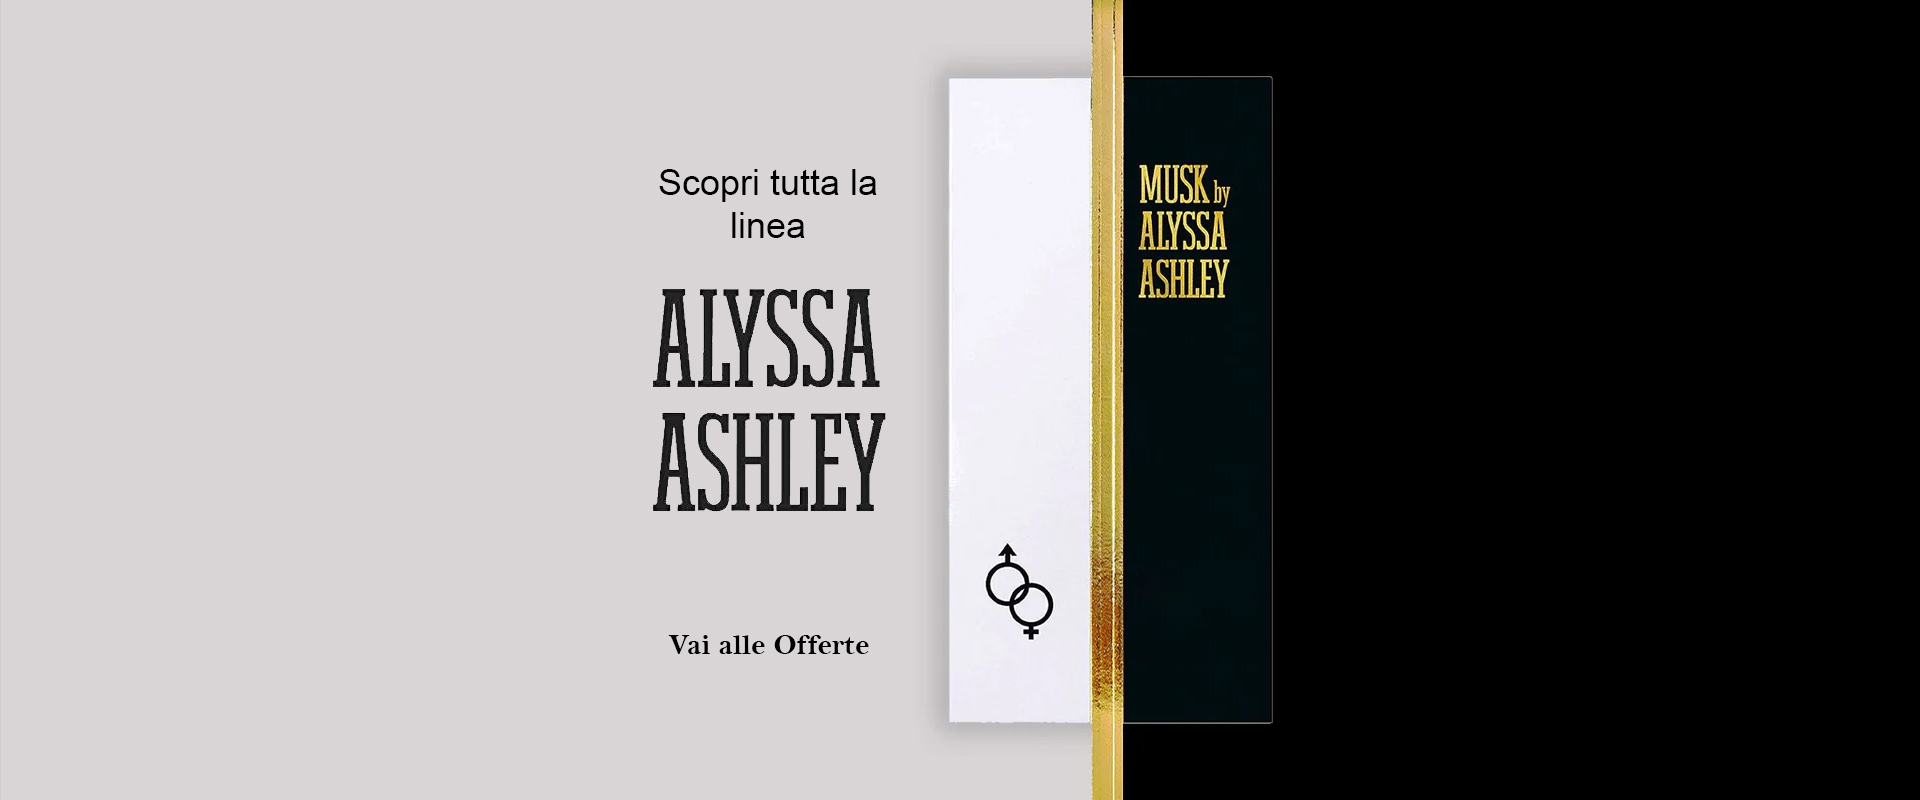 https://www.wolfprofumi.com/brand/alyssa-ashley/